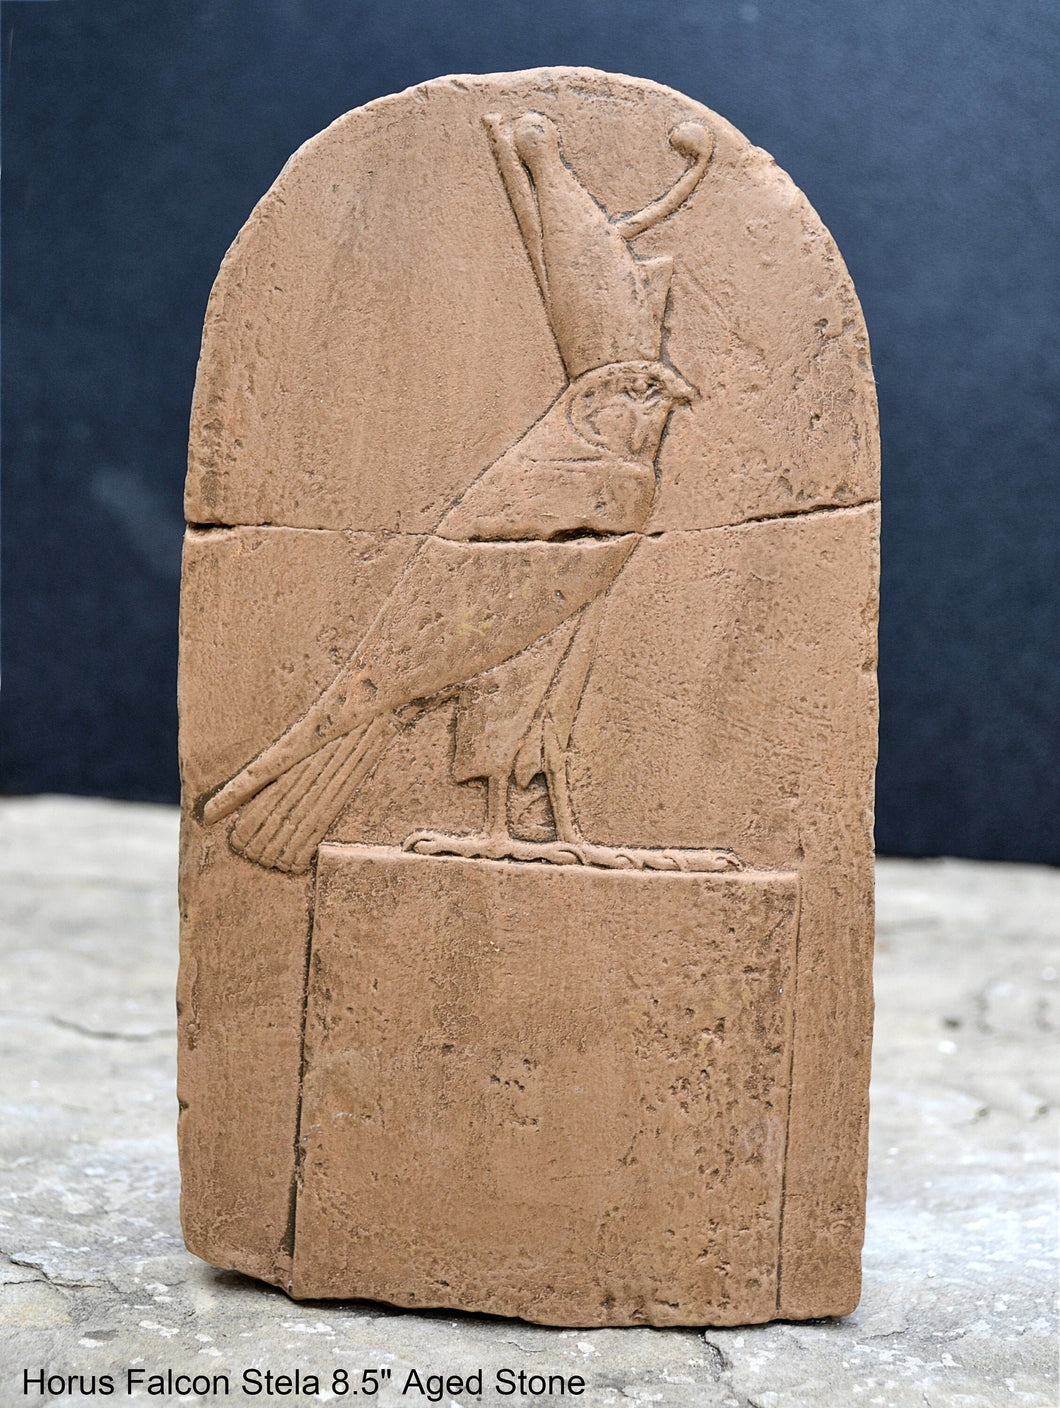 Egyptian Horus Falcon Stela Artifact Carved Sculpture Statue www.Neo-Mfg.com Wall art 8.5